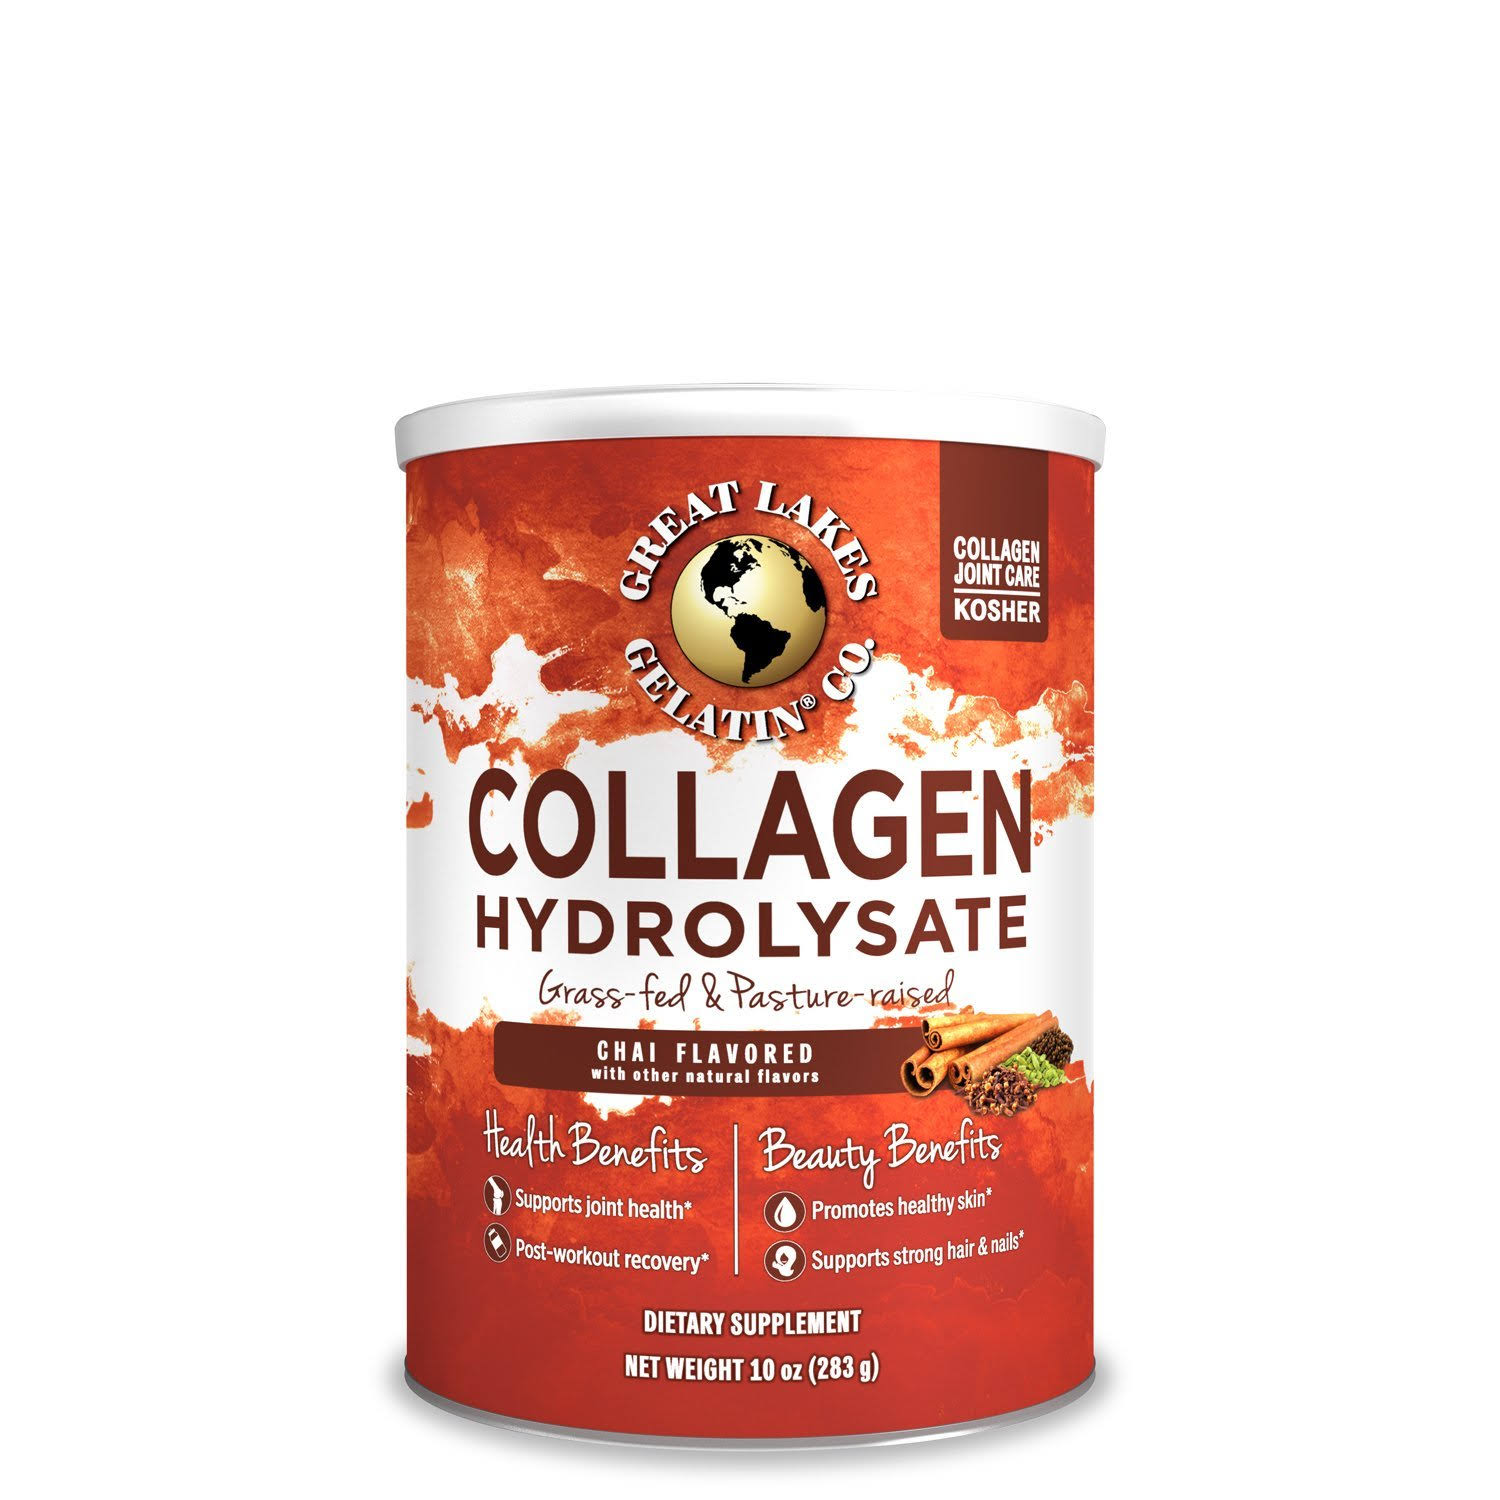 Great Lakes Gelatin - Collagen Hydrolysate, Chai Flavored - 10 oz (283